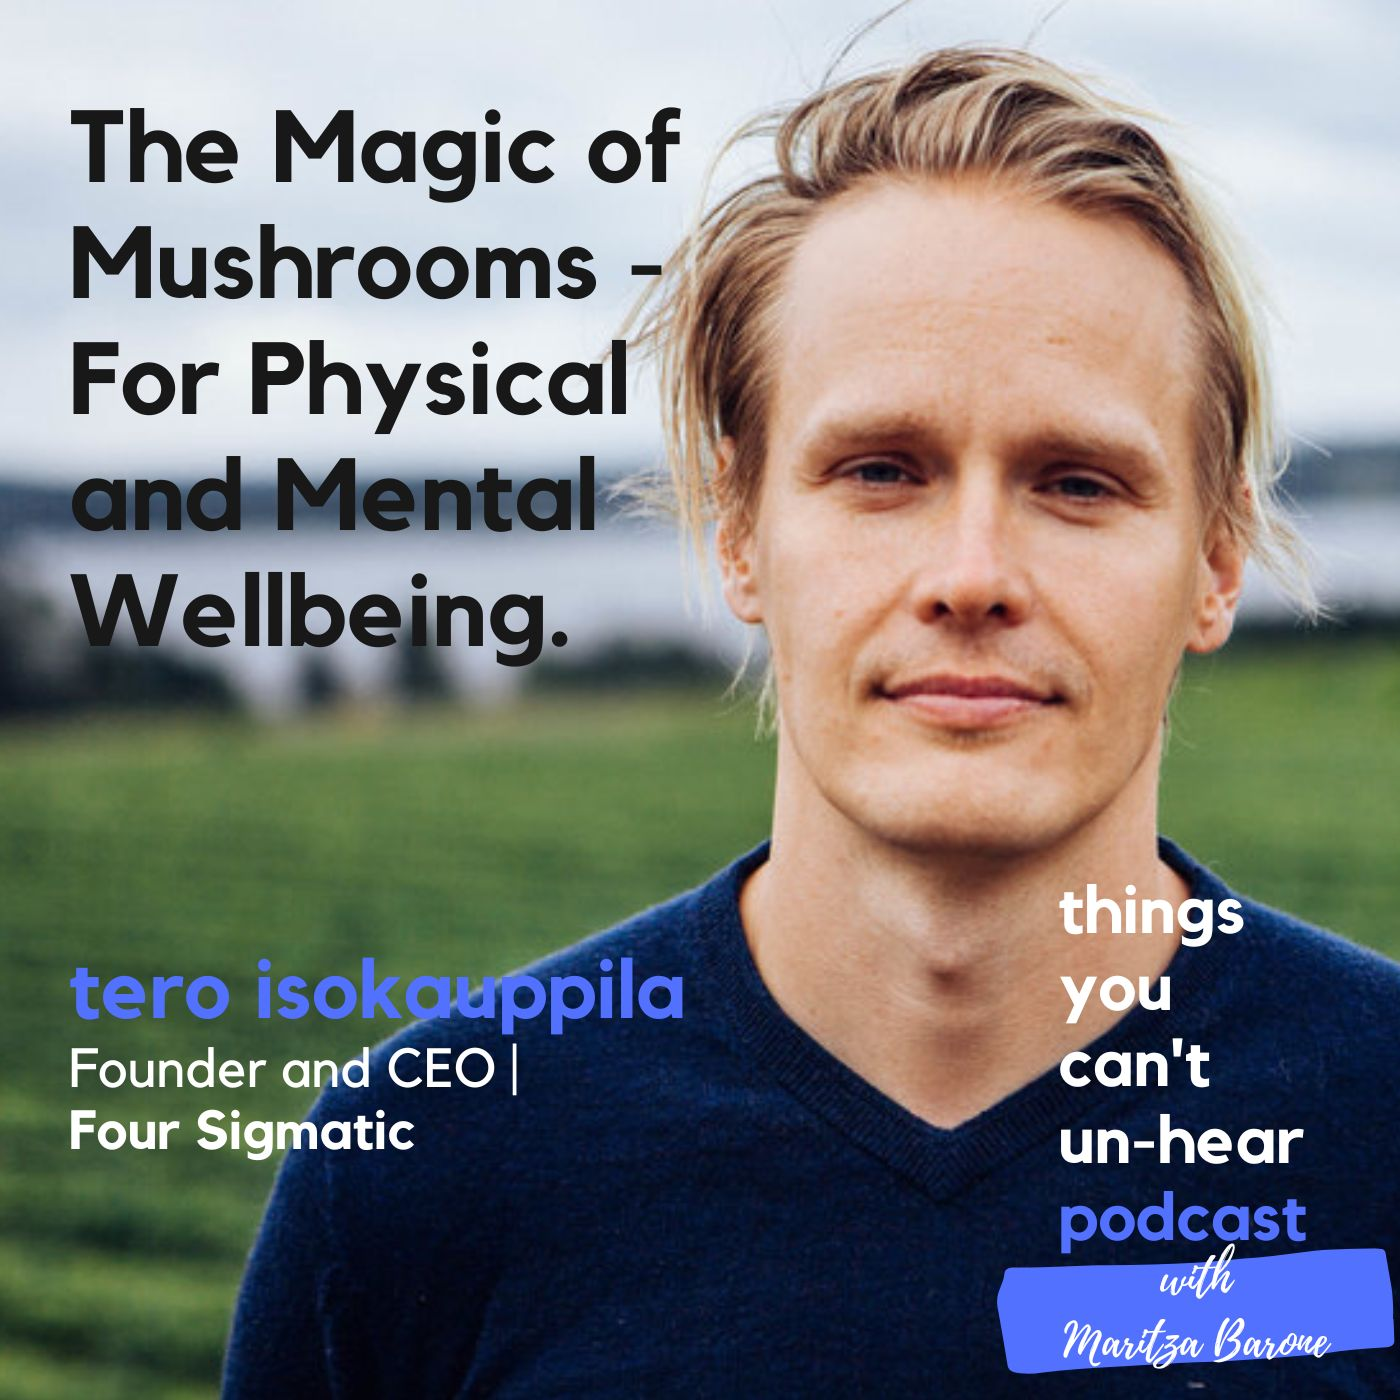 Tero Isokaupplia // The Magic of Mushrooms for Physical and Mental wellness